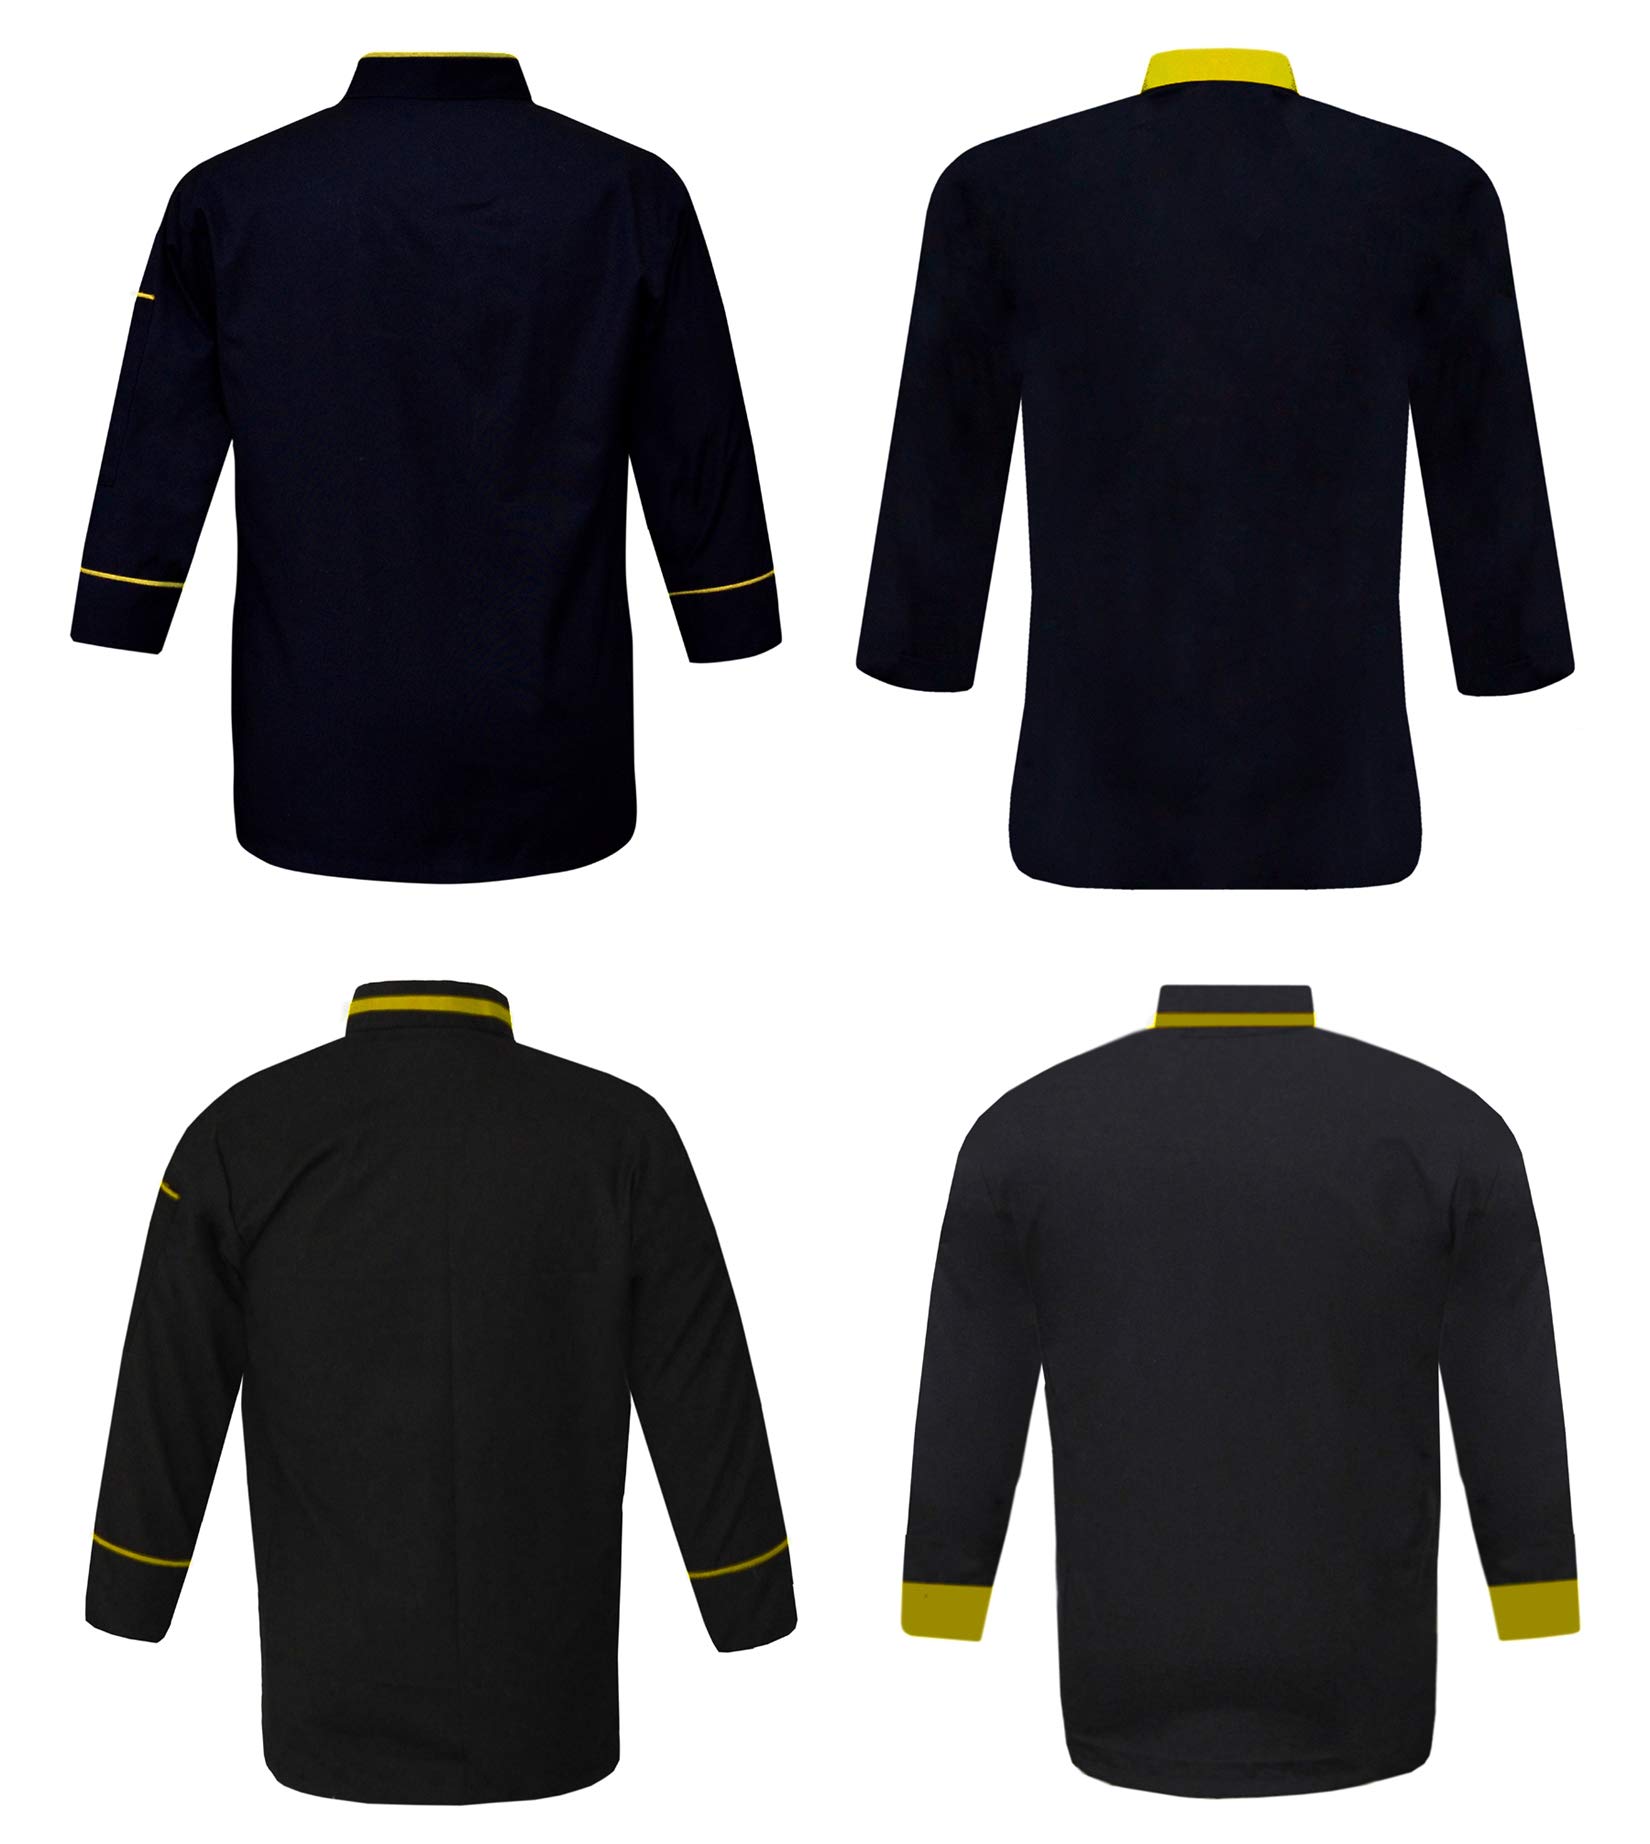 YARATACT Shaped Men's Black Chef Jacket Black Colour Pack of 4 Chef Coat (Light Yellow, X-Large)